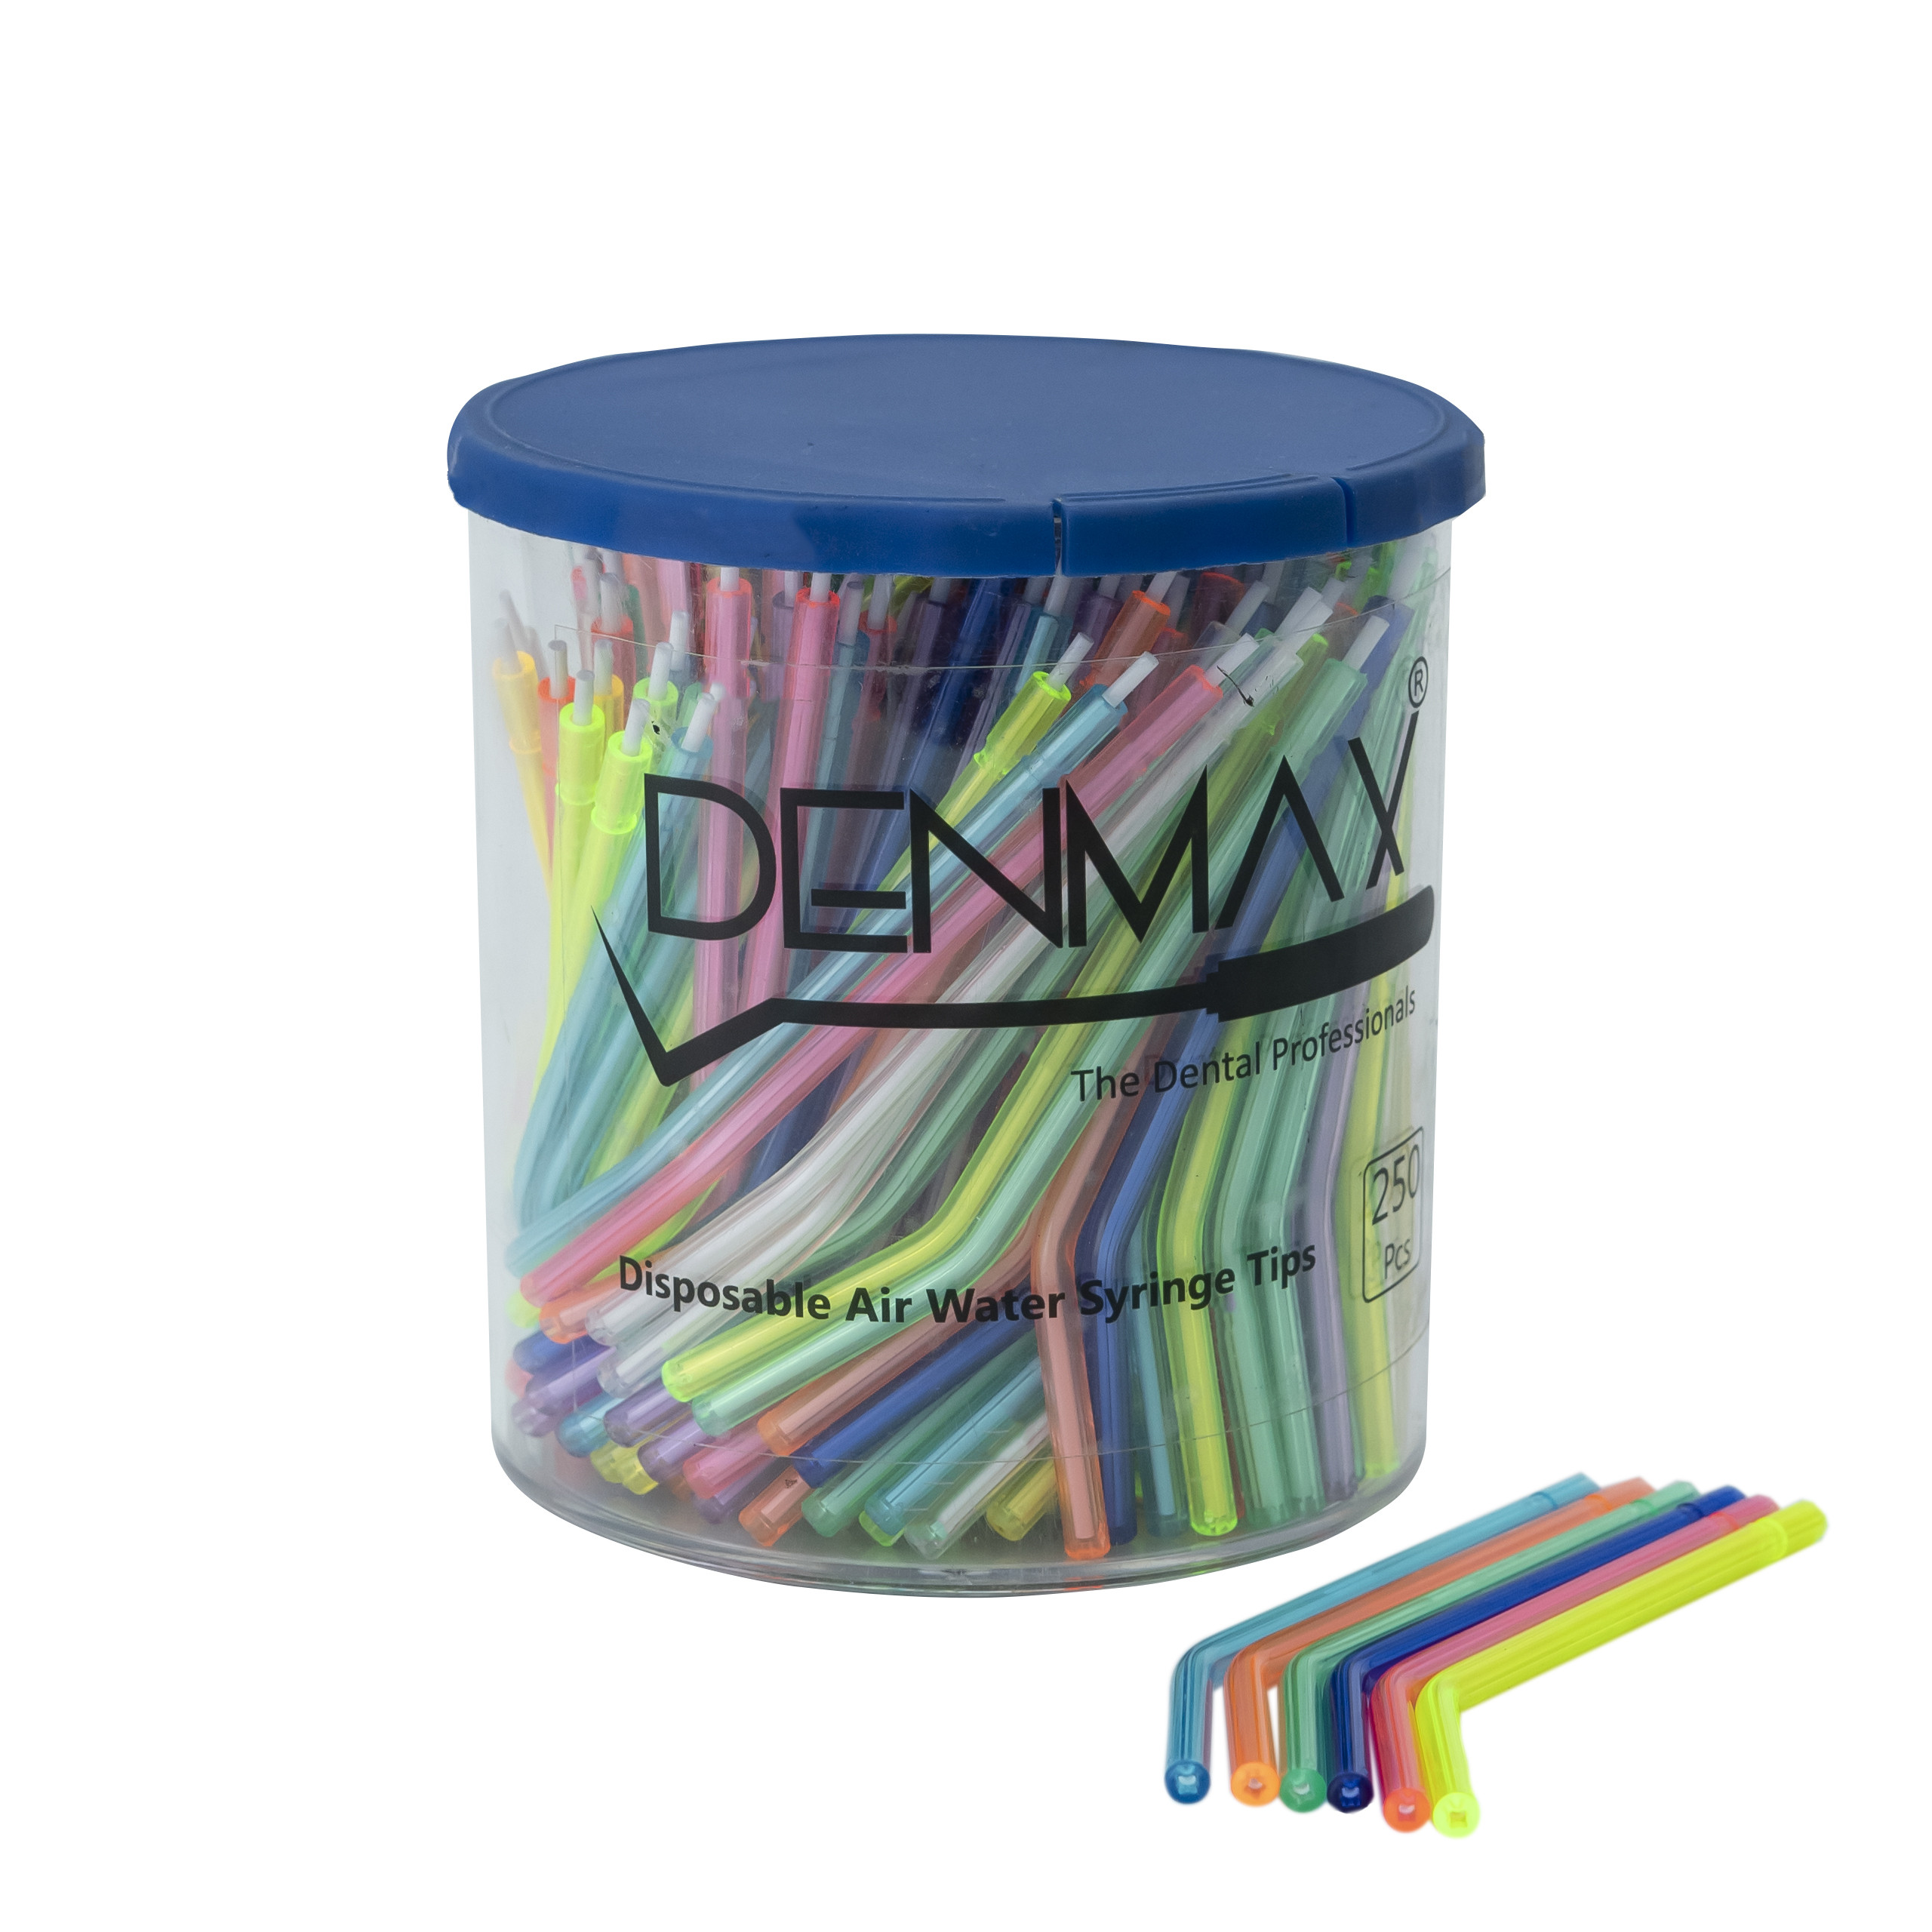 Denmax Air Water Syringe Tips Disposable (250pcs)